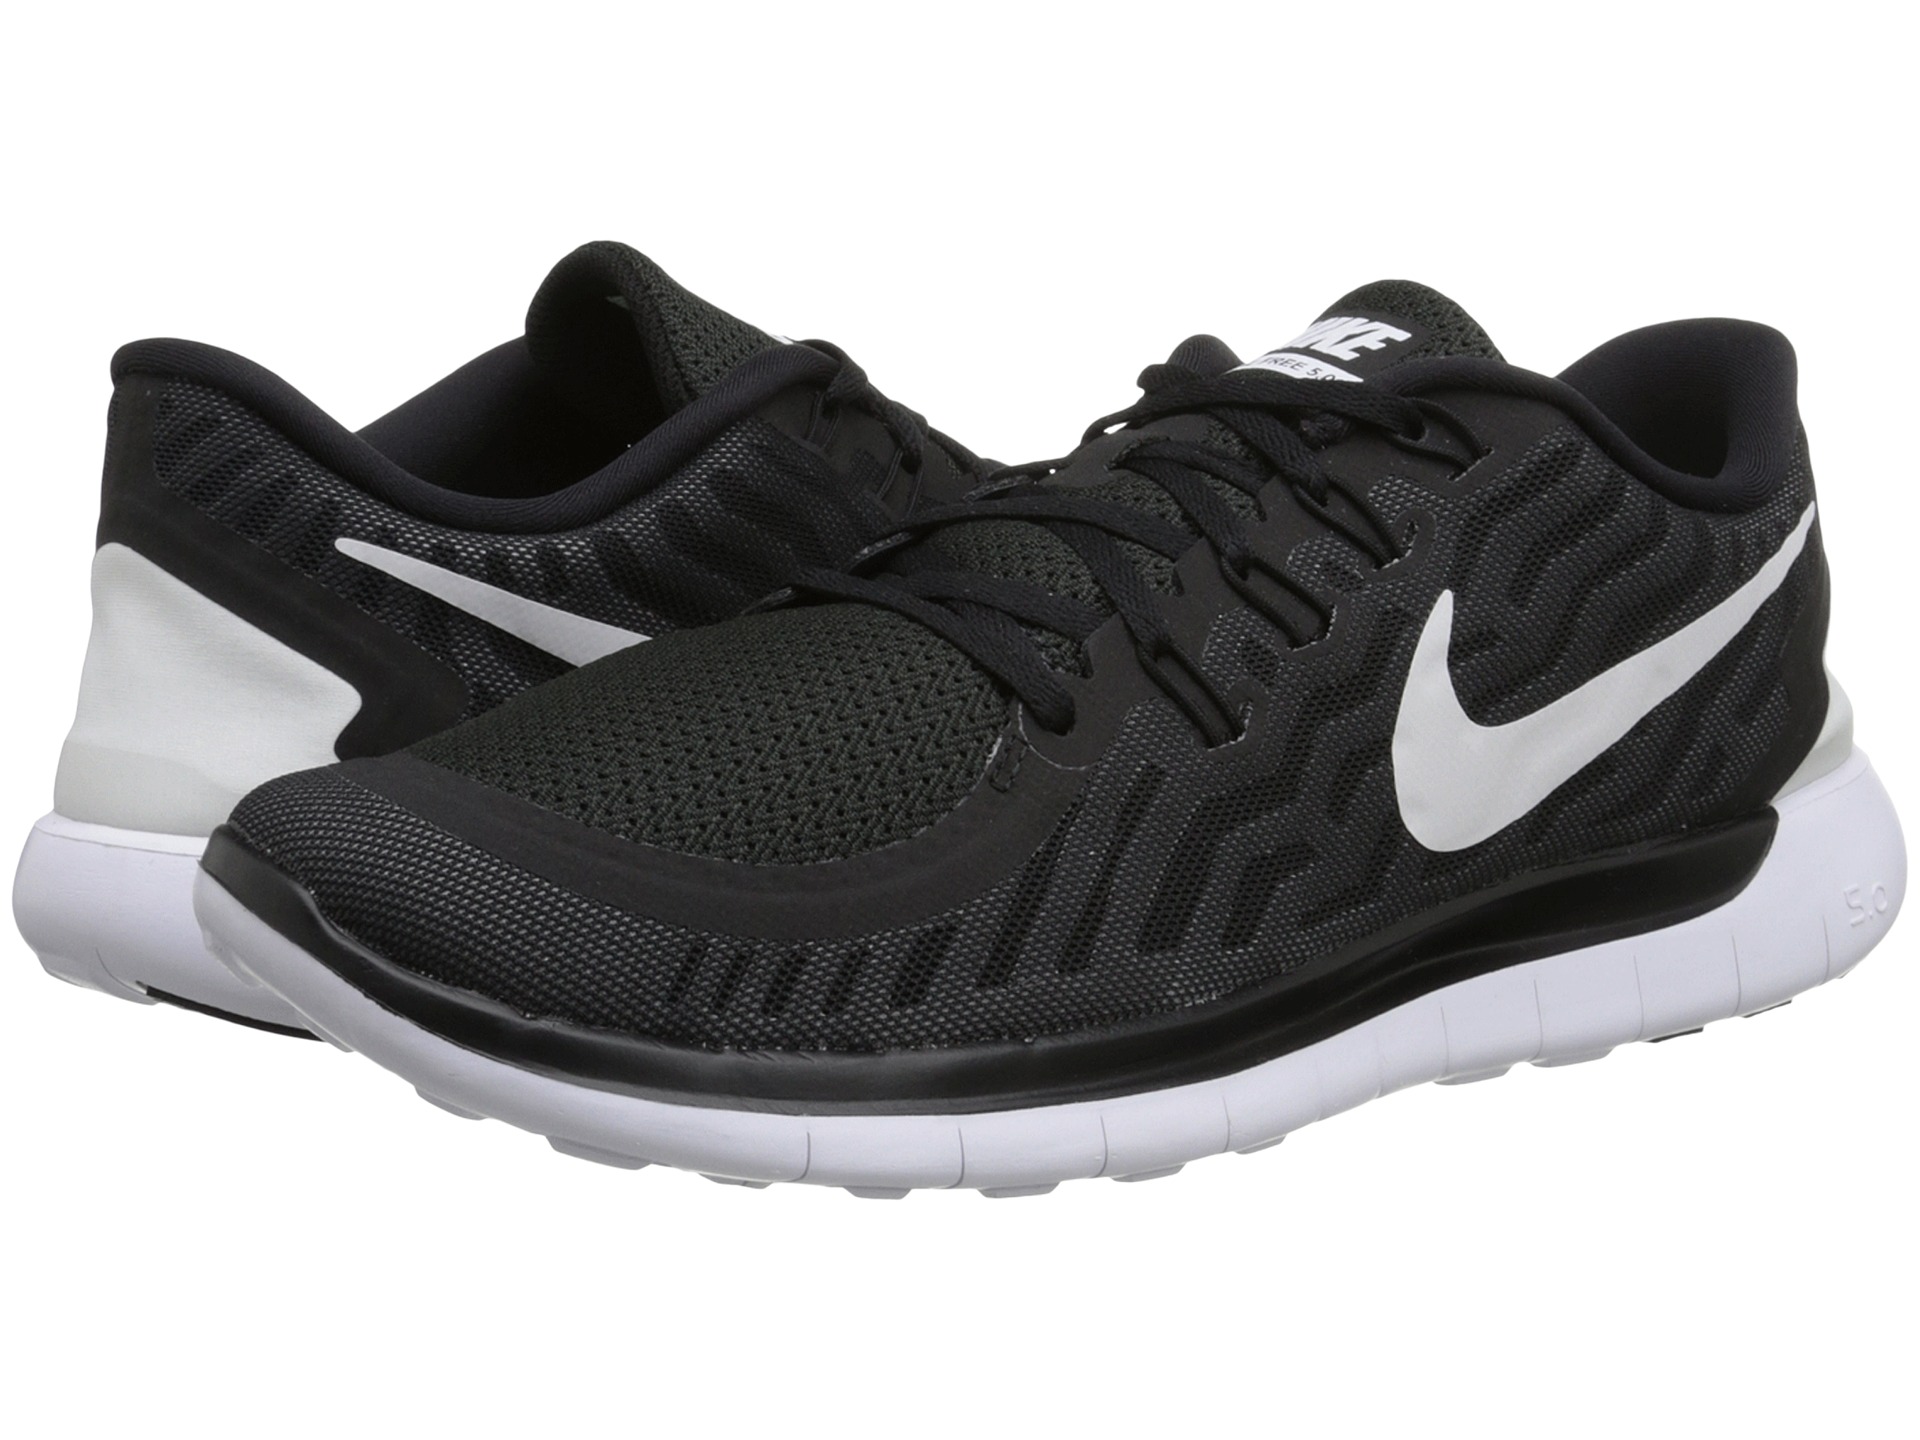 Nike Free 5.0 Black/Dark Grey/Cool Grey/White - Zappos.com Free ...